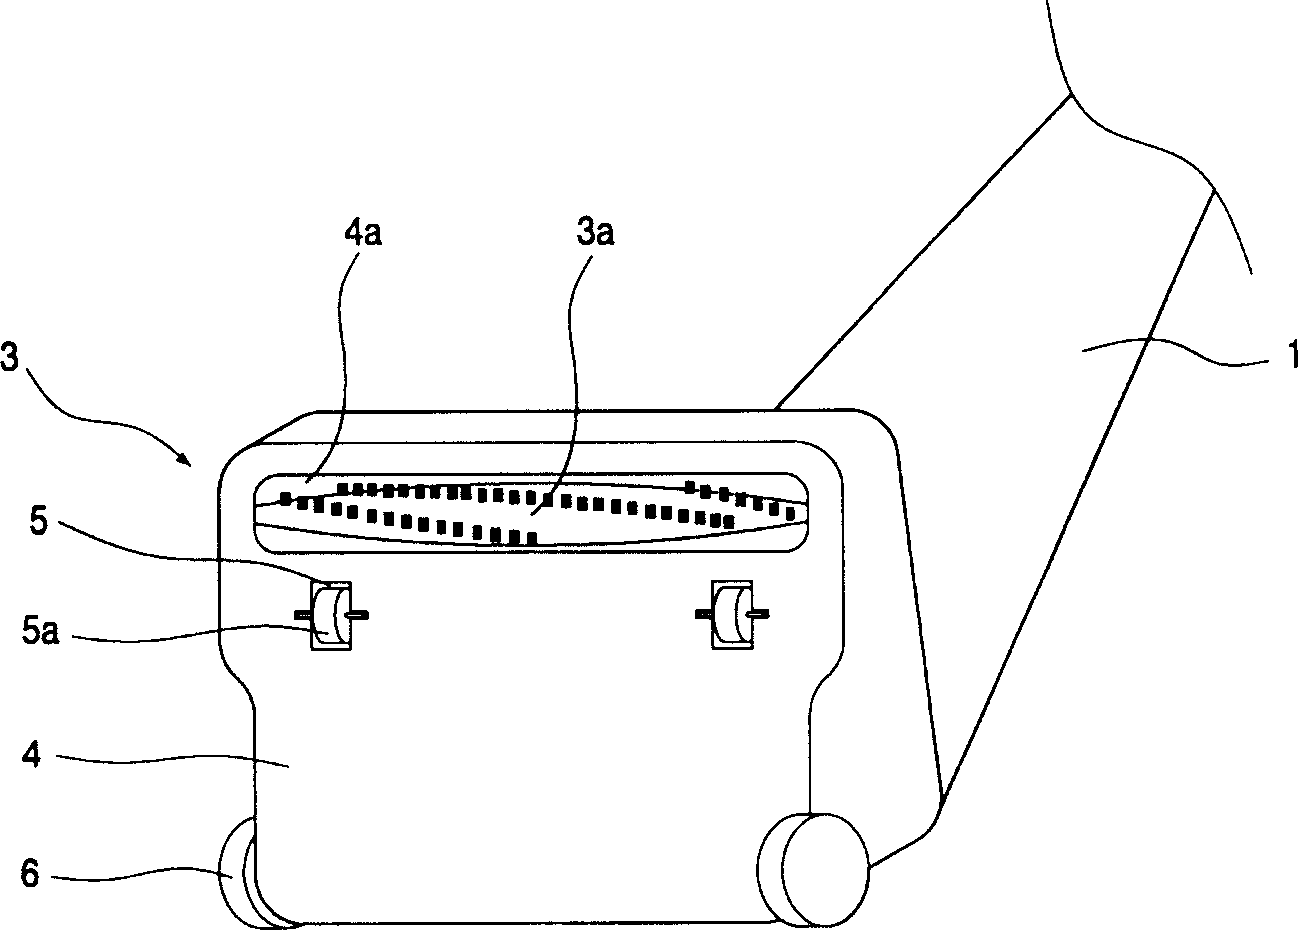 Direction conversion apparatus of vertical vacuum cleaner